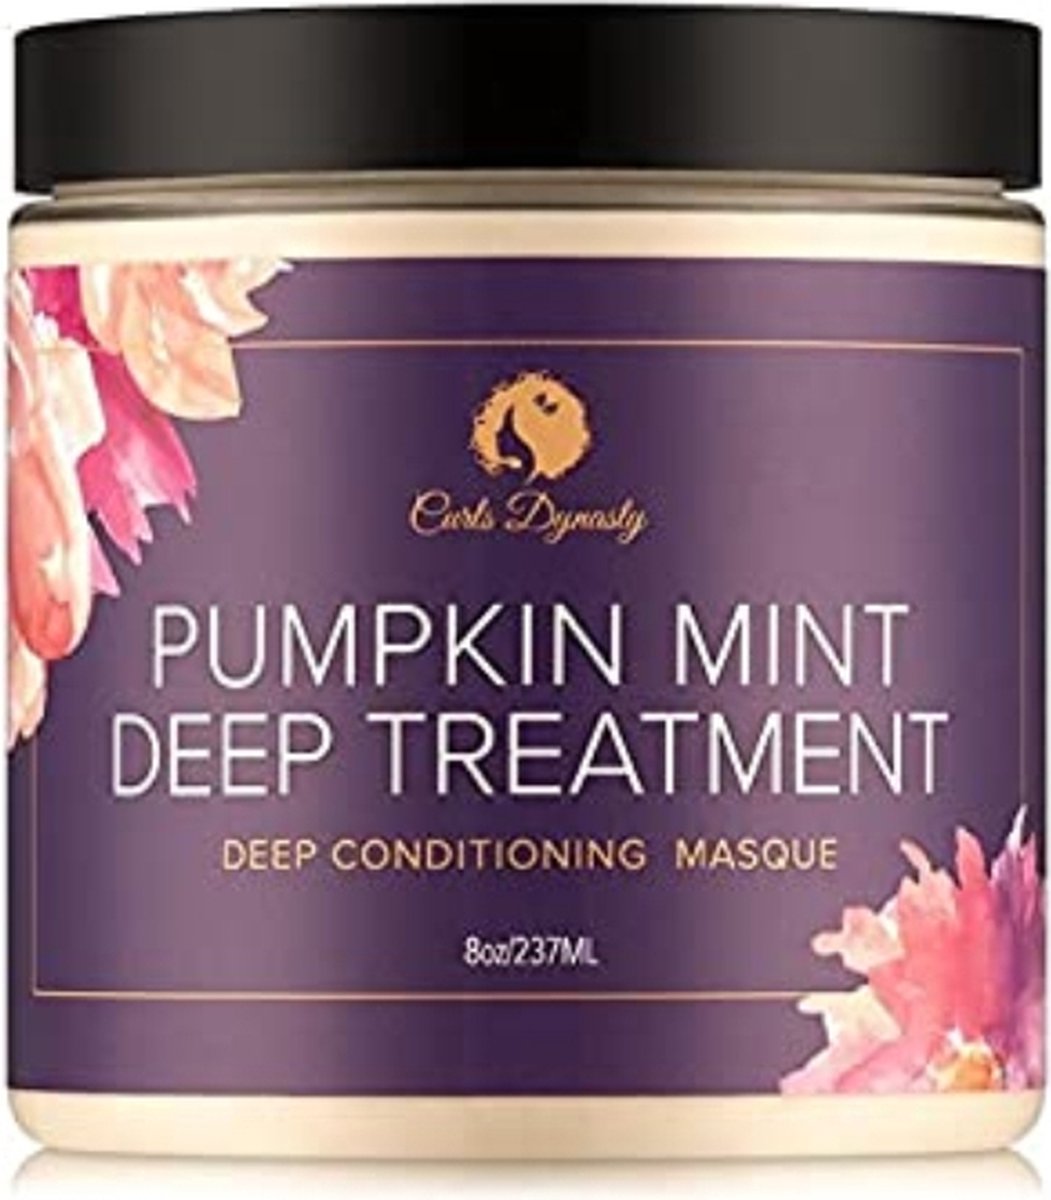 Curls Dynasty Pumpkin Mint Deep Treatment Masque 8oz